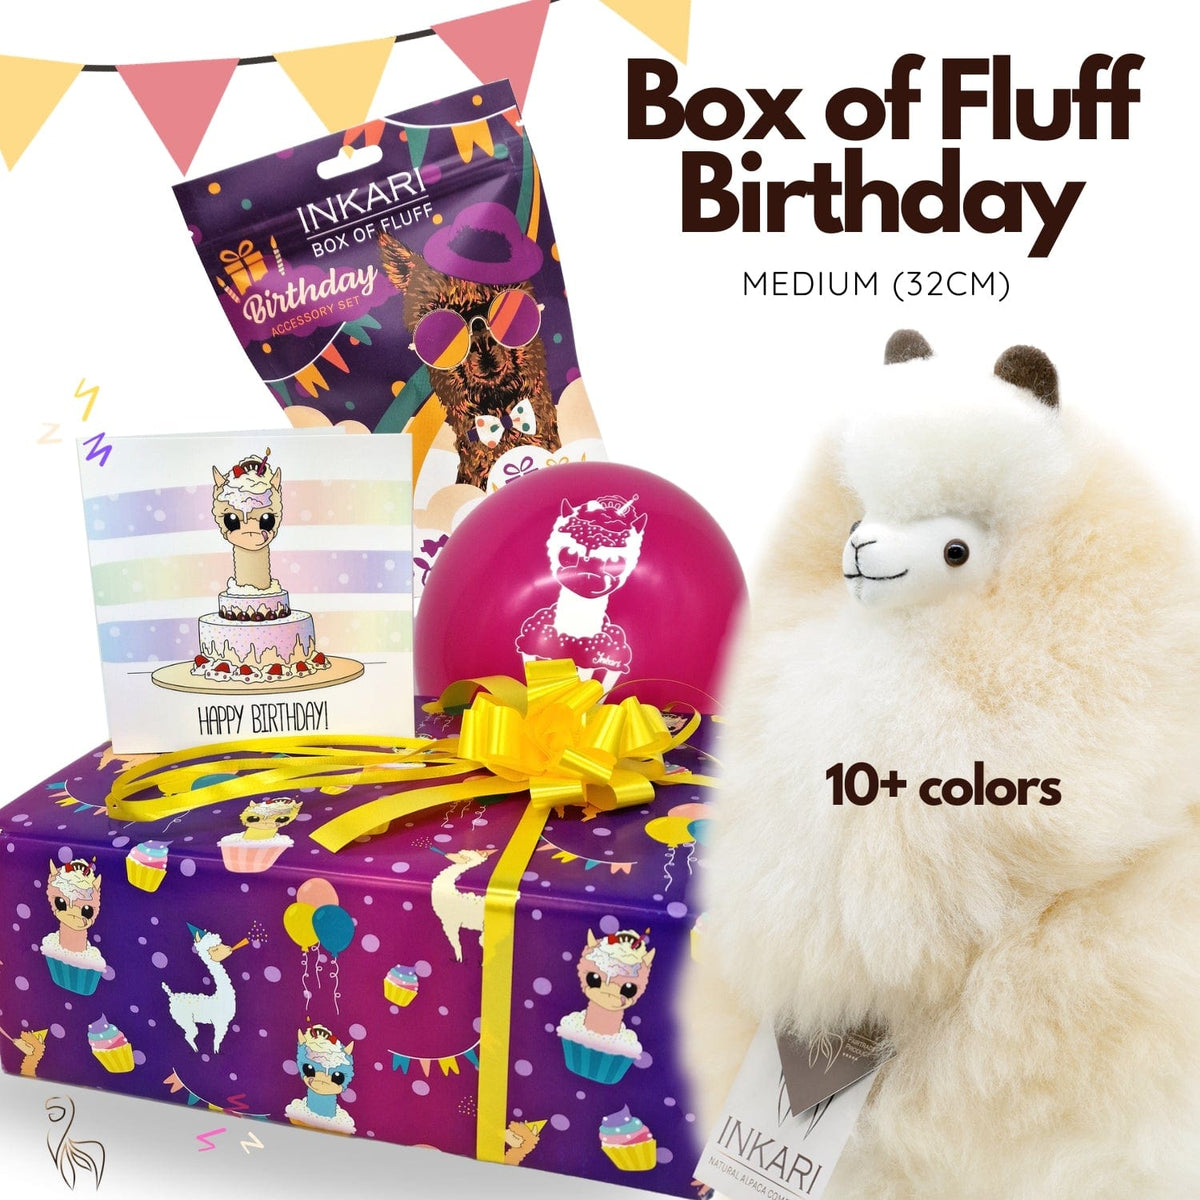 Box of Fluff - Medium (32cm) - Birthday